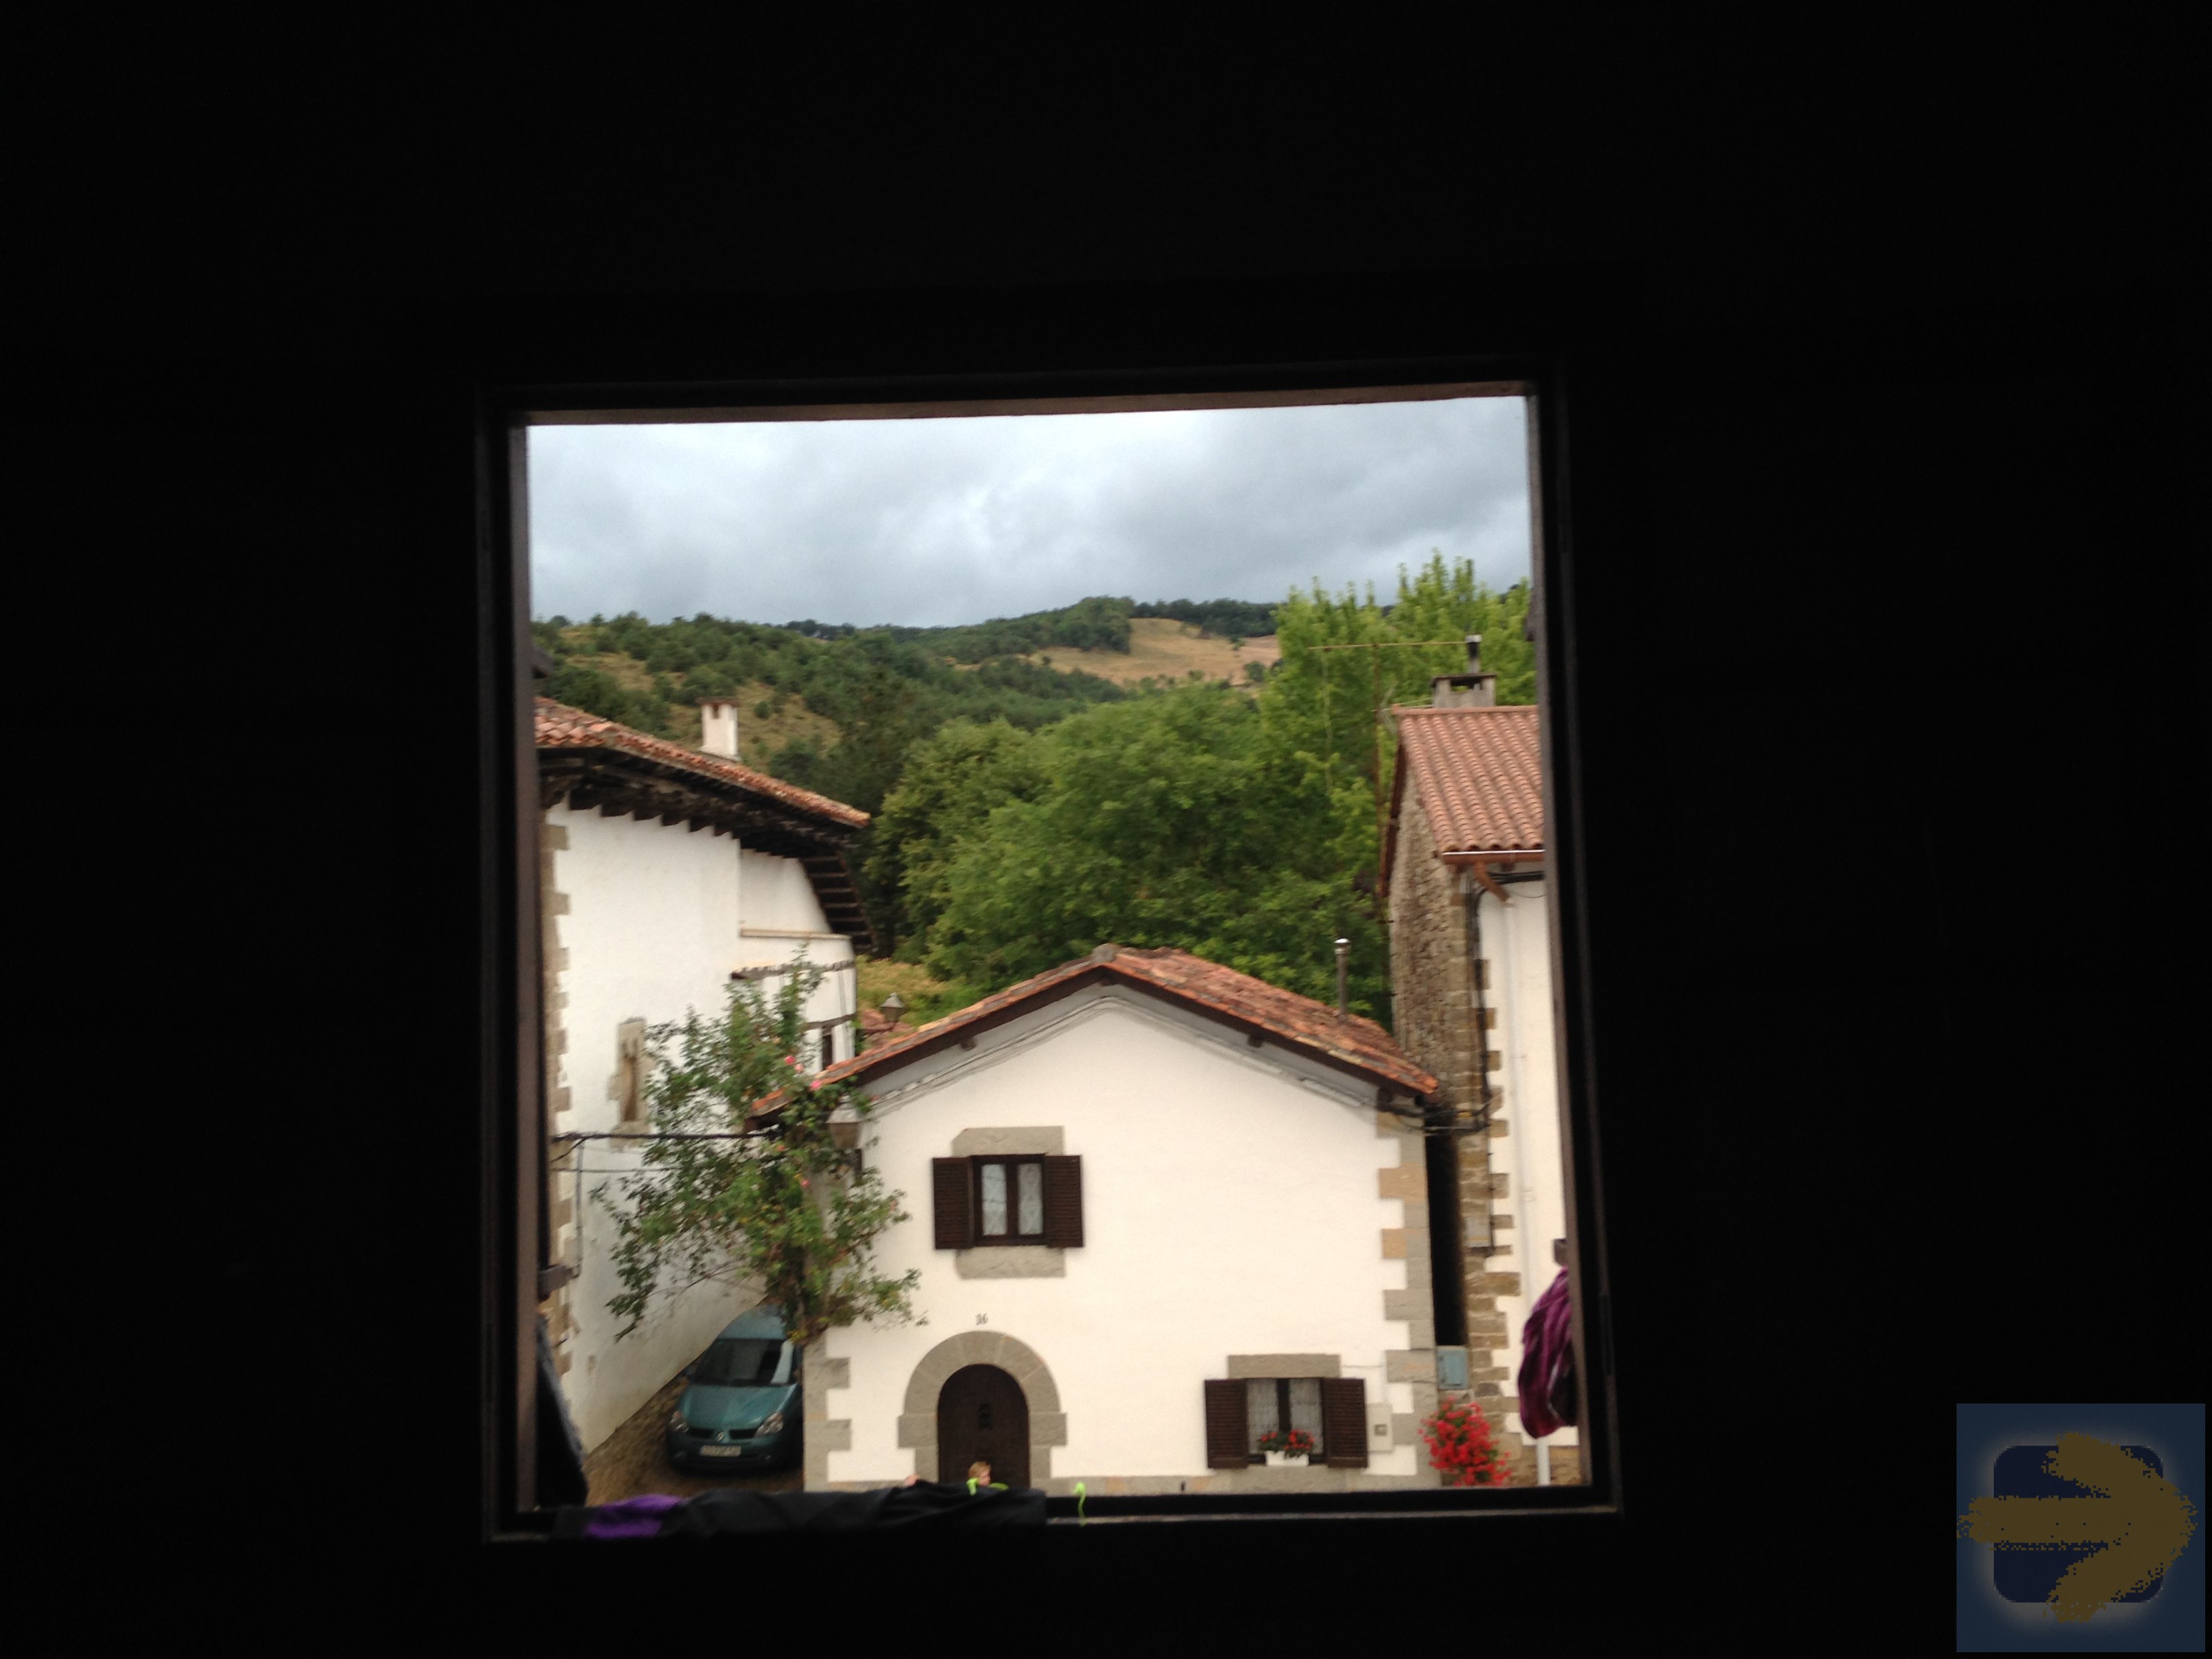 The view from Larassoana albergue window